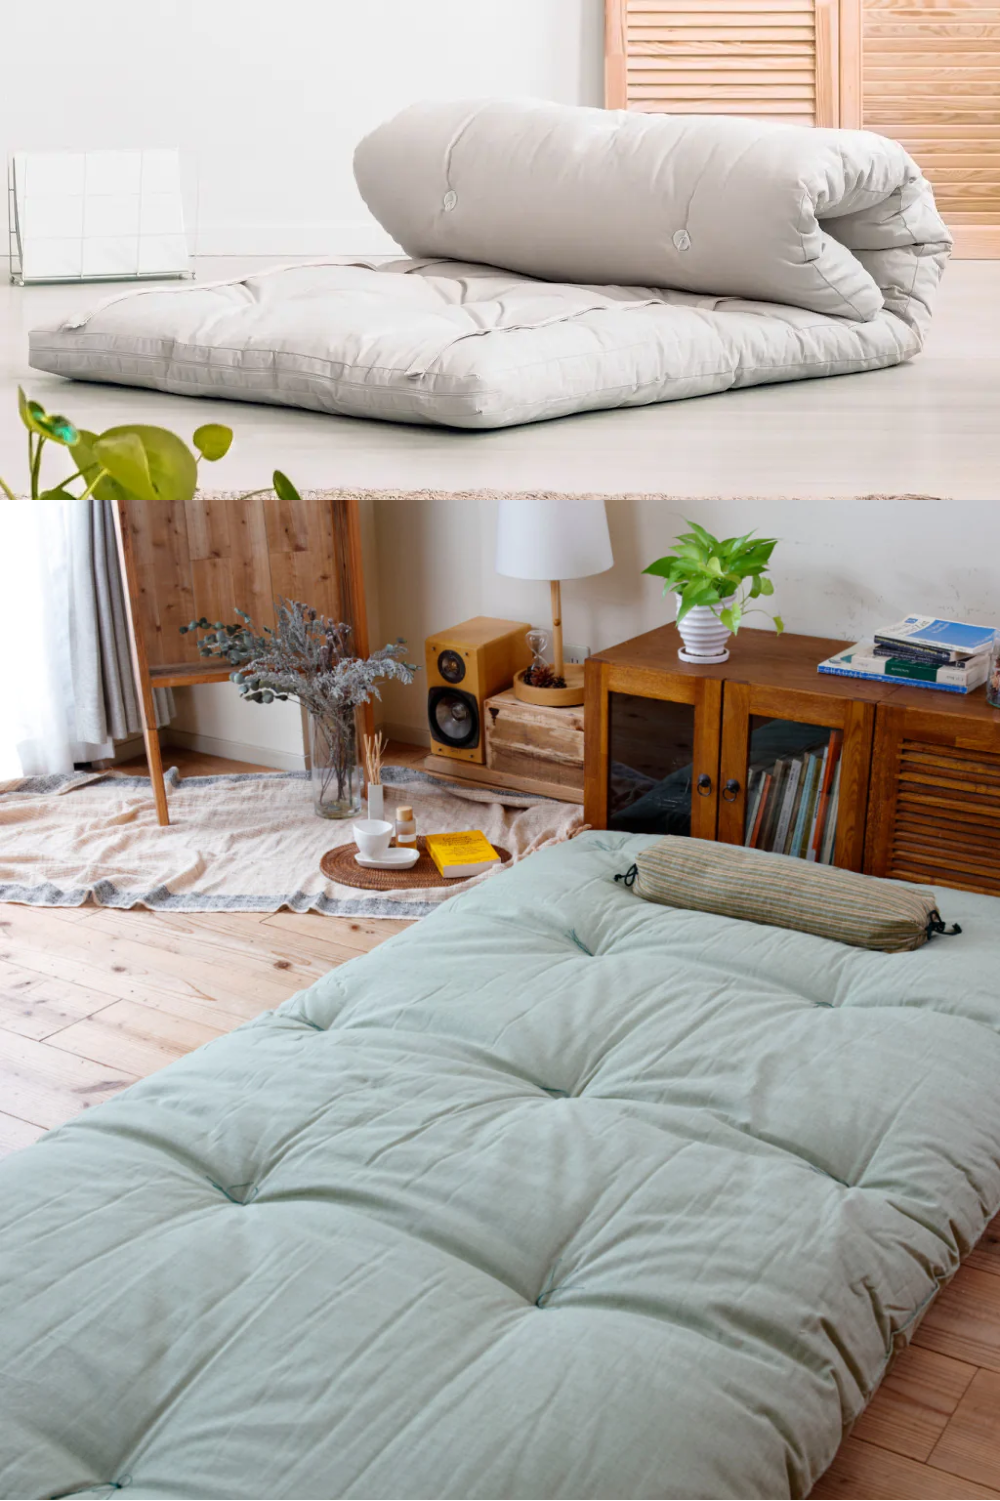 Few common info on futon mattresses